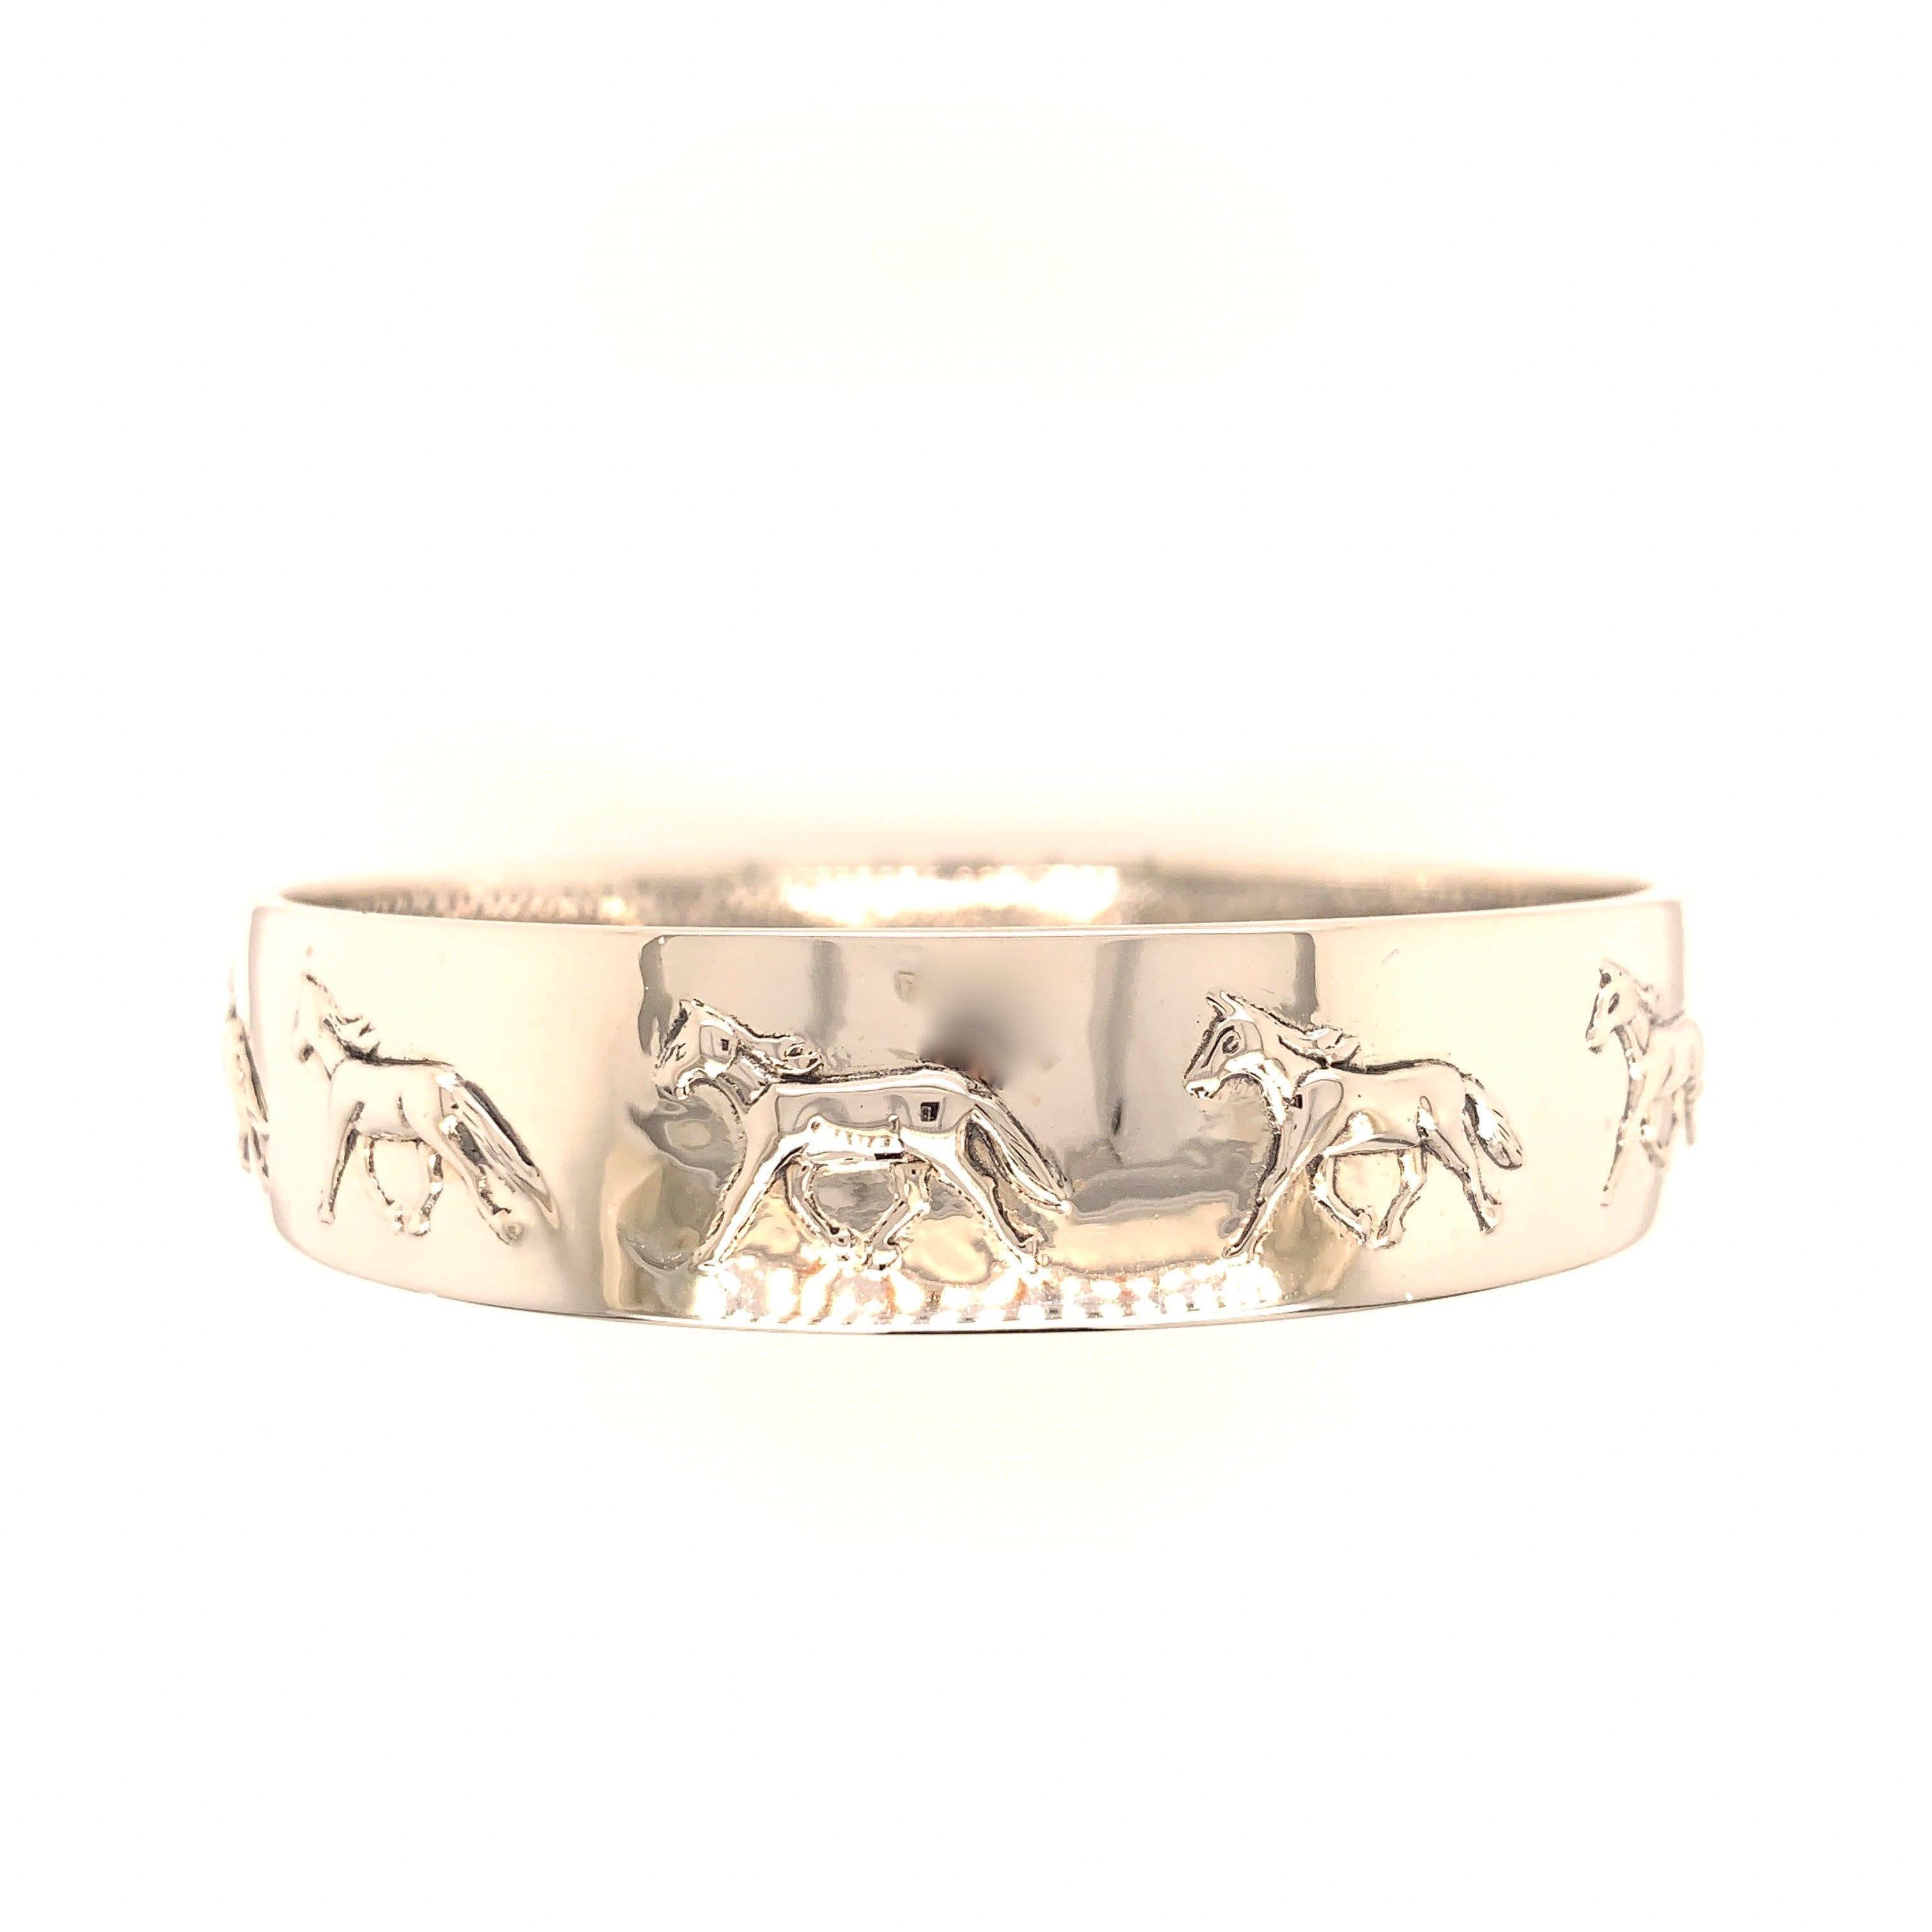 Horse bracelet